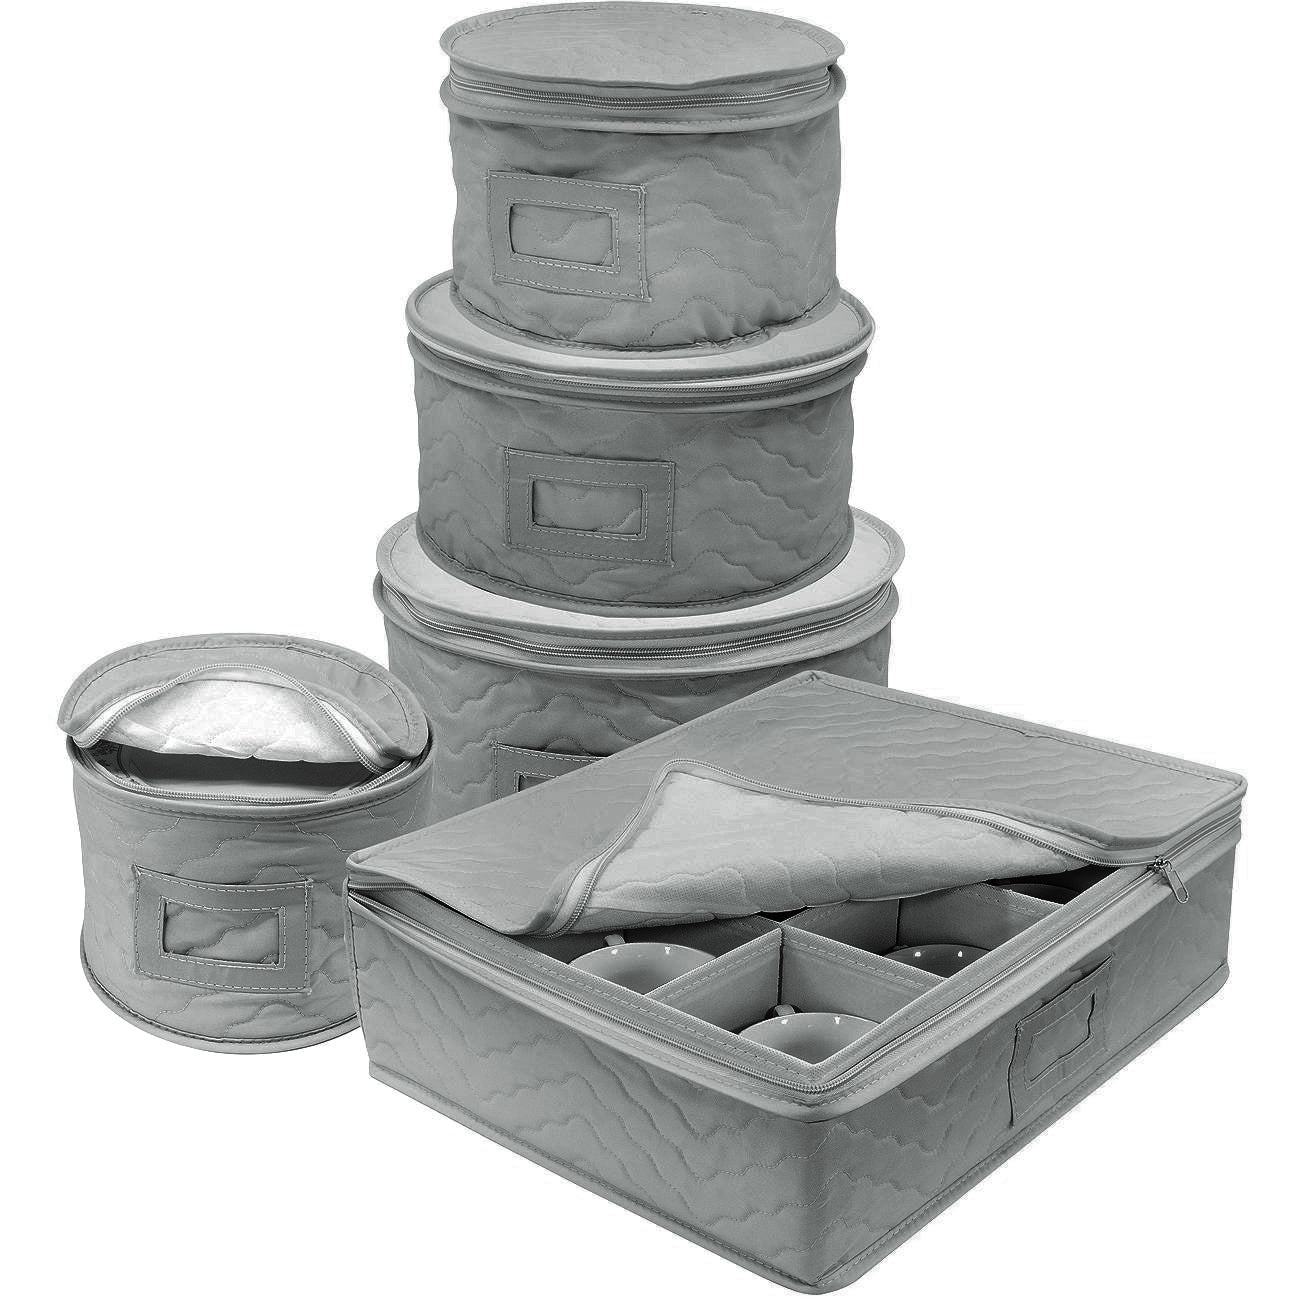 Dish Storage Boxes